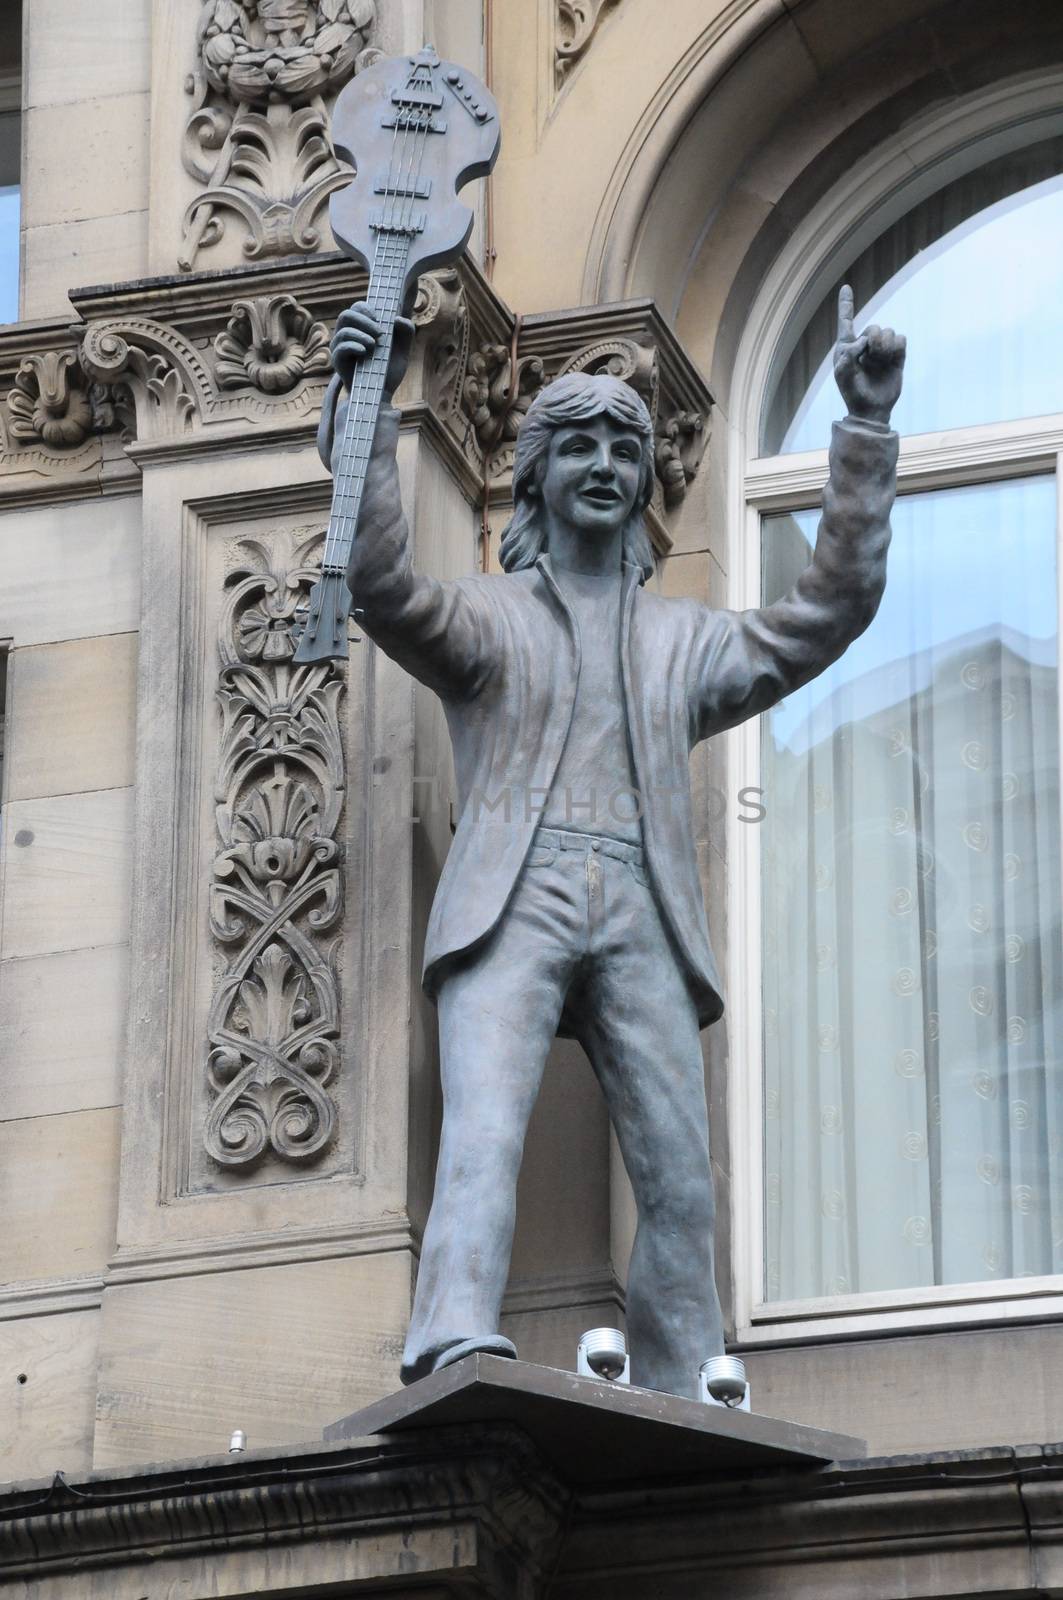 Paul McCartney statue in Liverpool